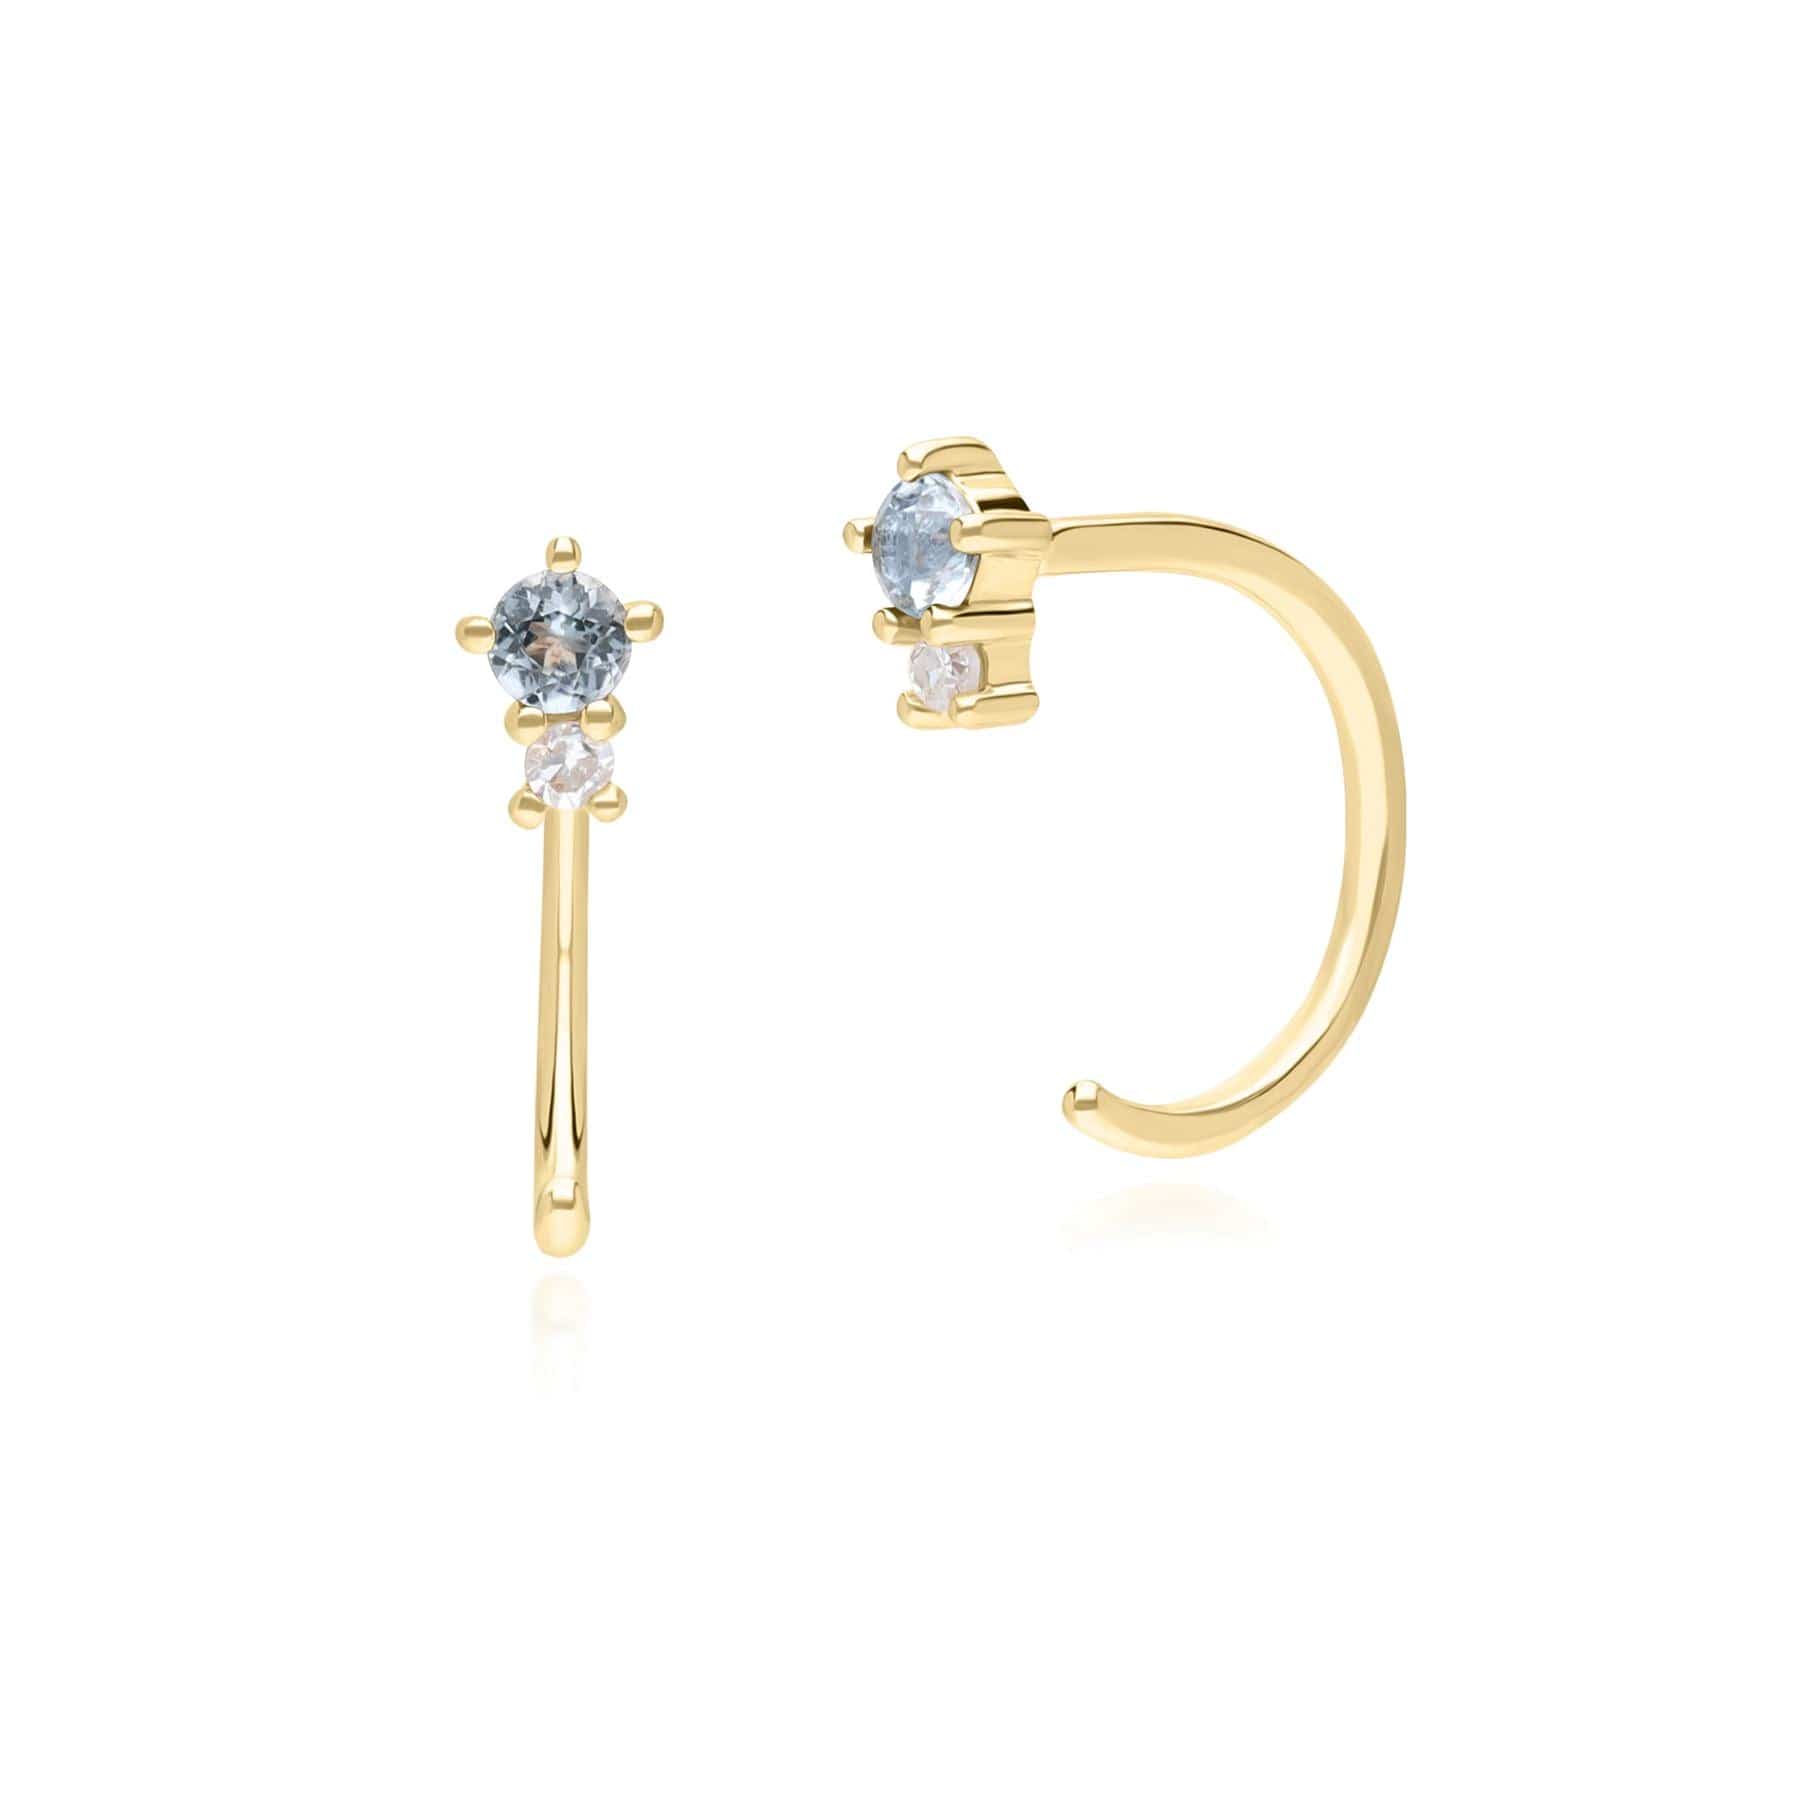 Modern Classic Sky Blue Topaz & Diamond Pull Through Hoop Earrings in 9ct Yellow Gold - Gemondo